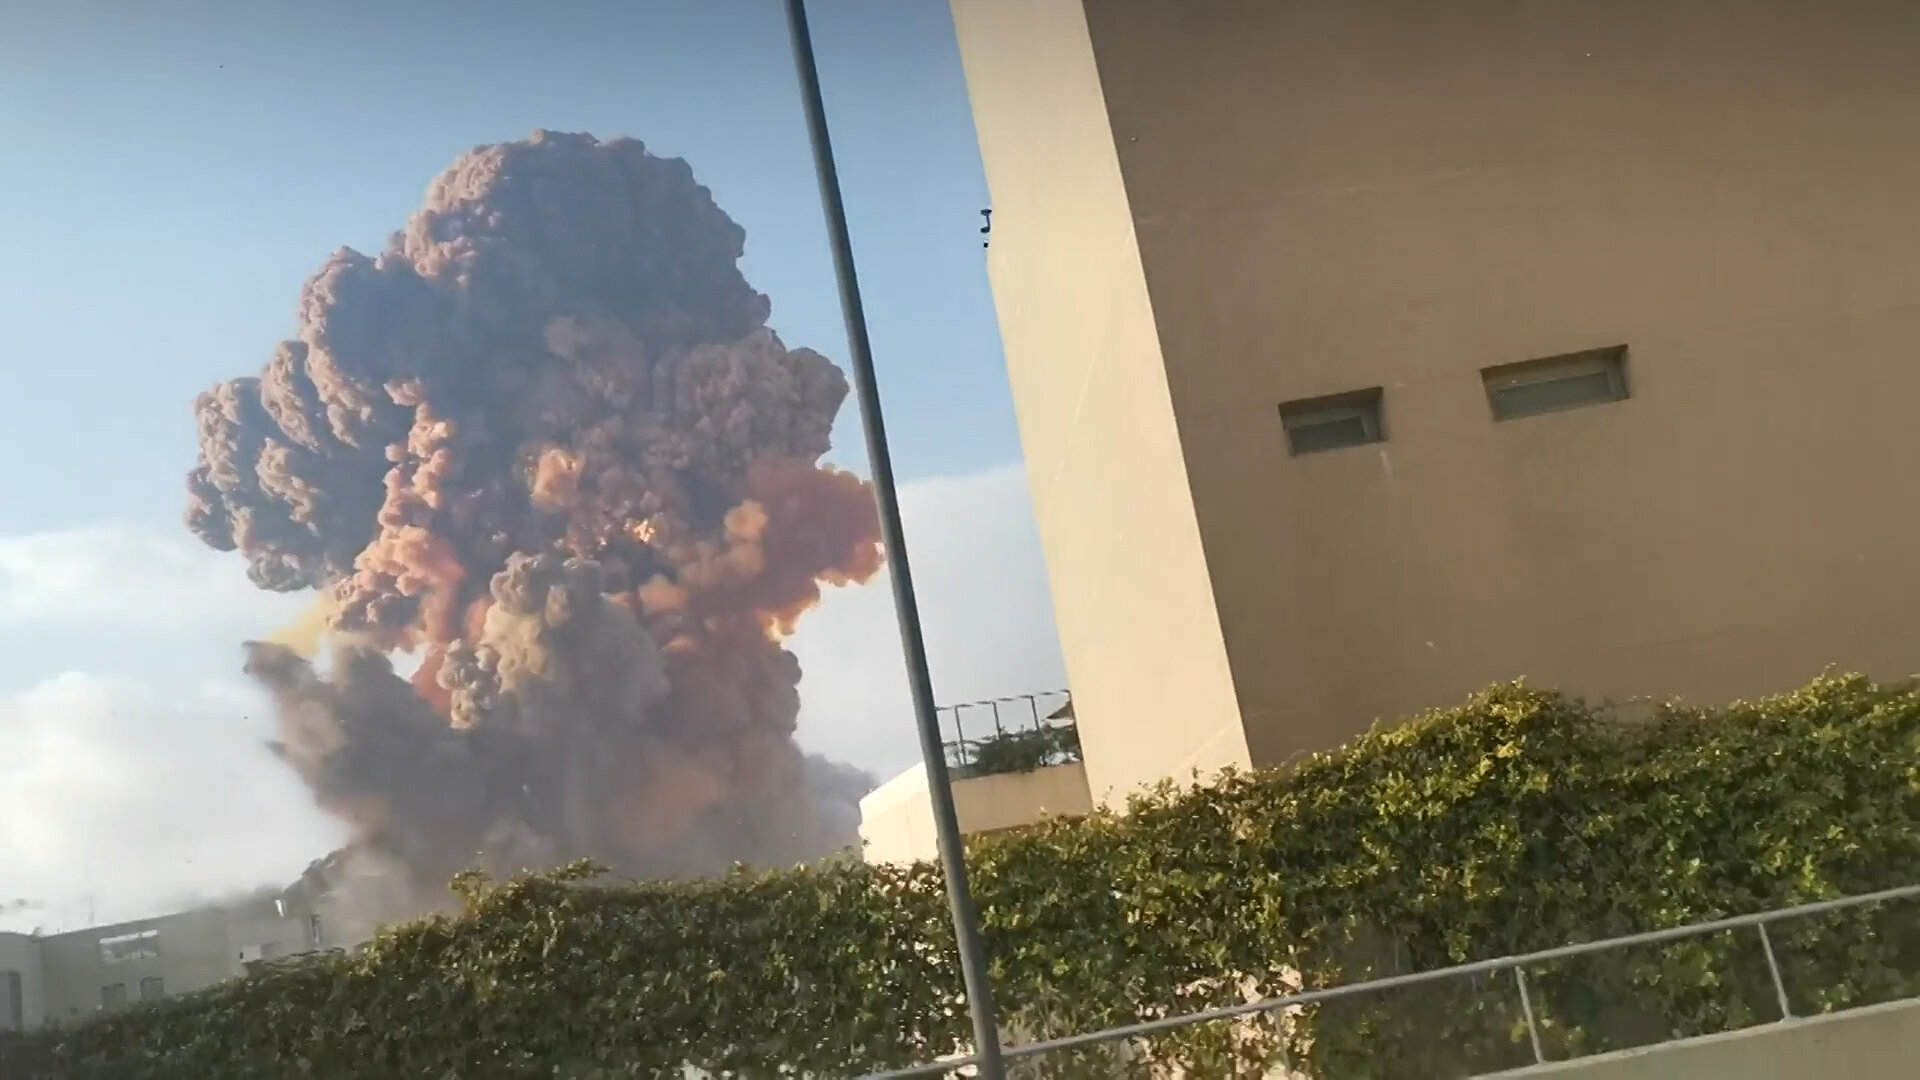 https://www.nytimes.com/es/2020/08/06/espanol/mundo/beirut-video-explosion-libano.html